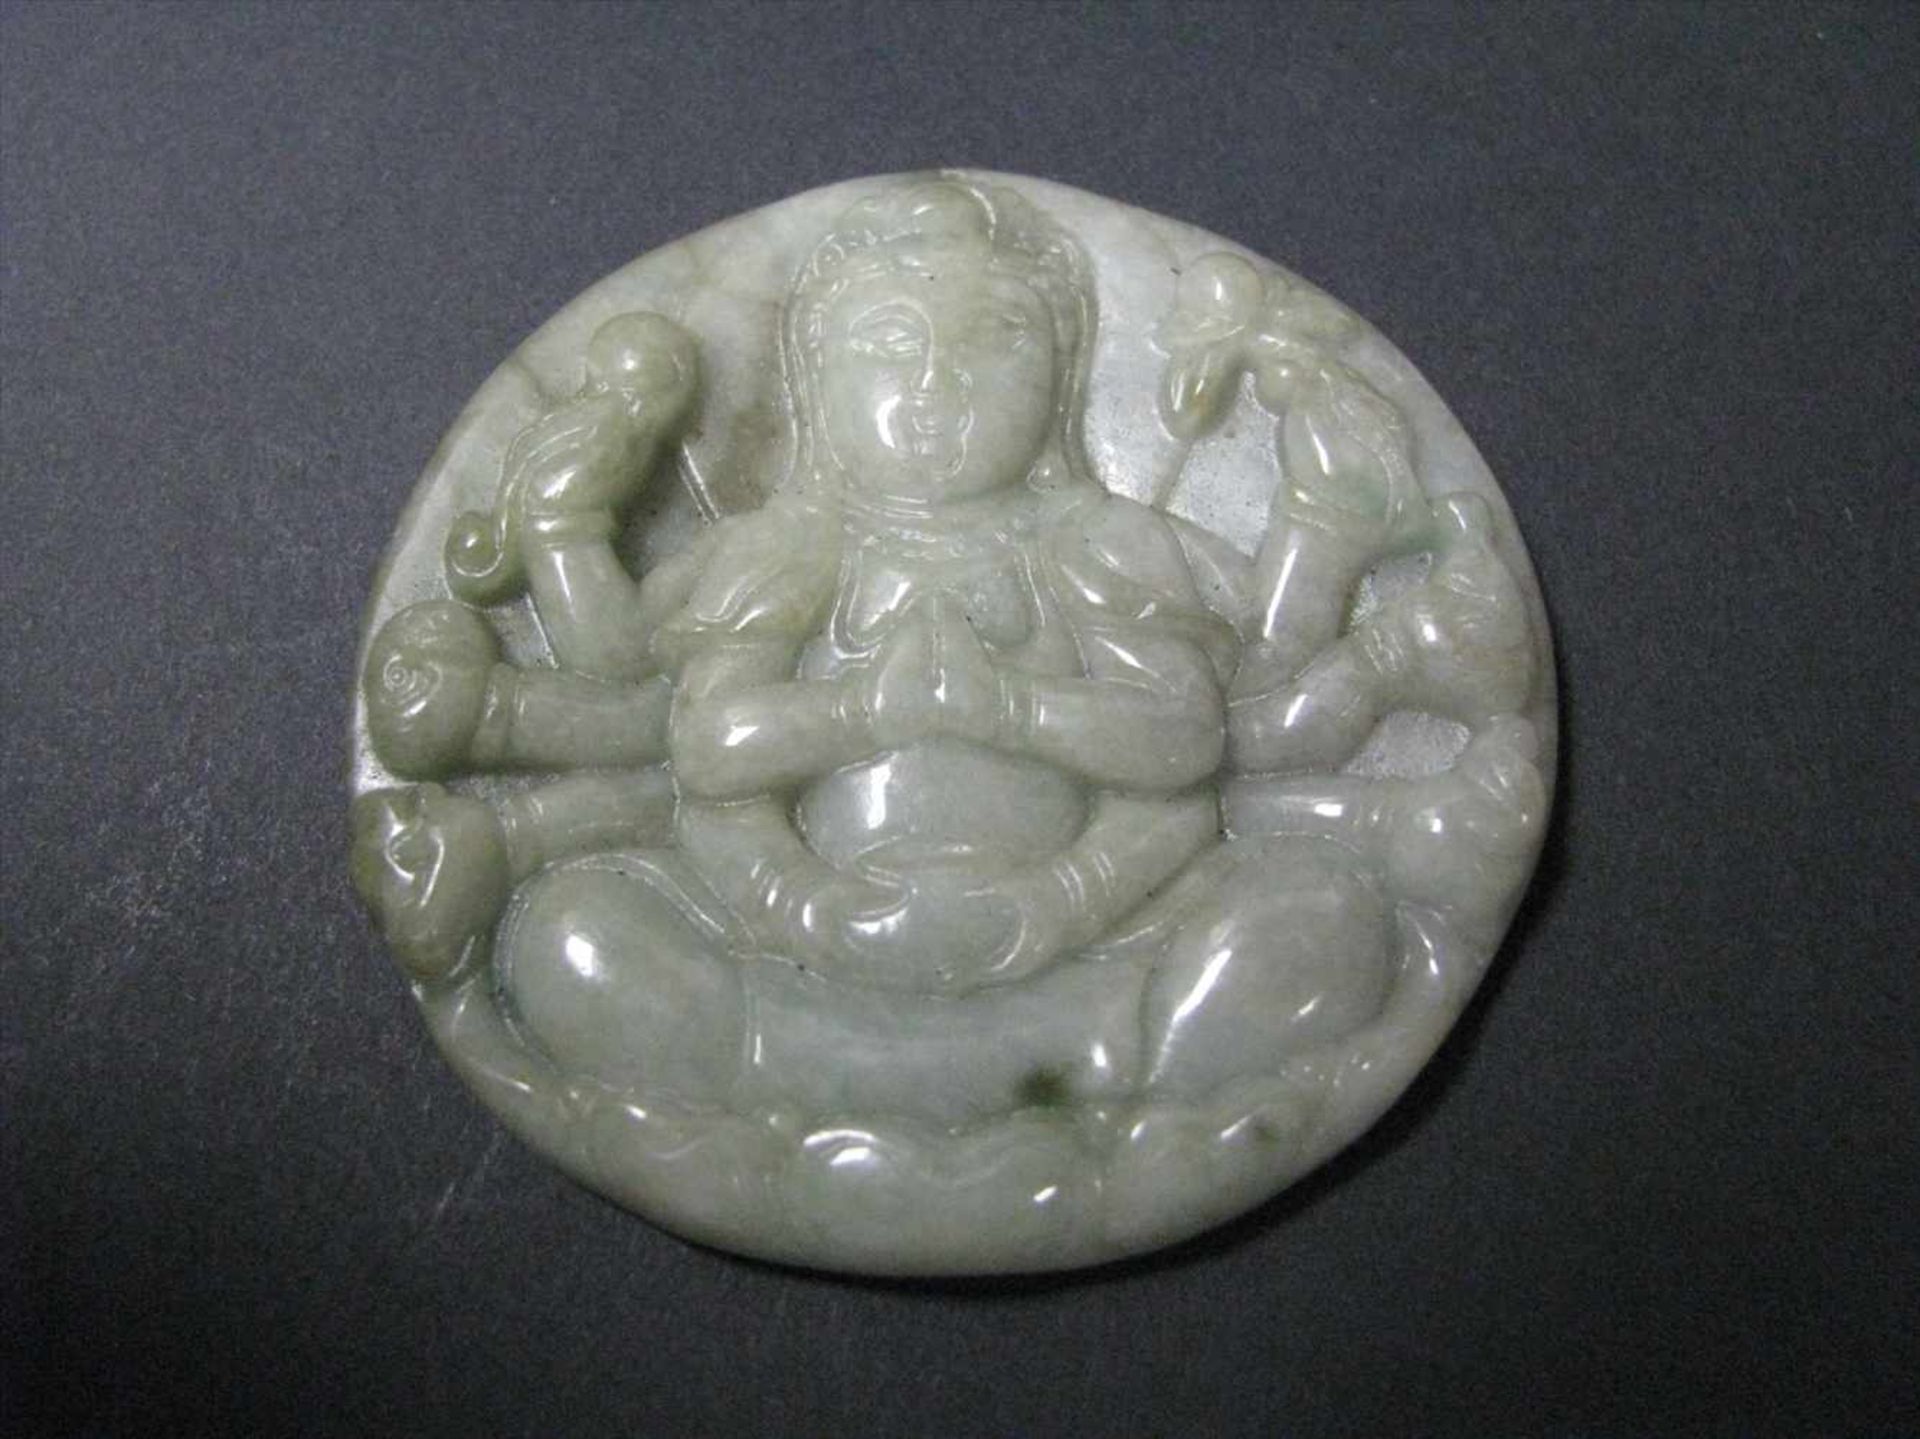 Anhänger, Tibet/Nepal, sitzende, vielarmige Göttin Shiva, weiß-grünliche Jade beschnitzt, d 5,5 cm.